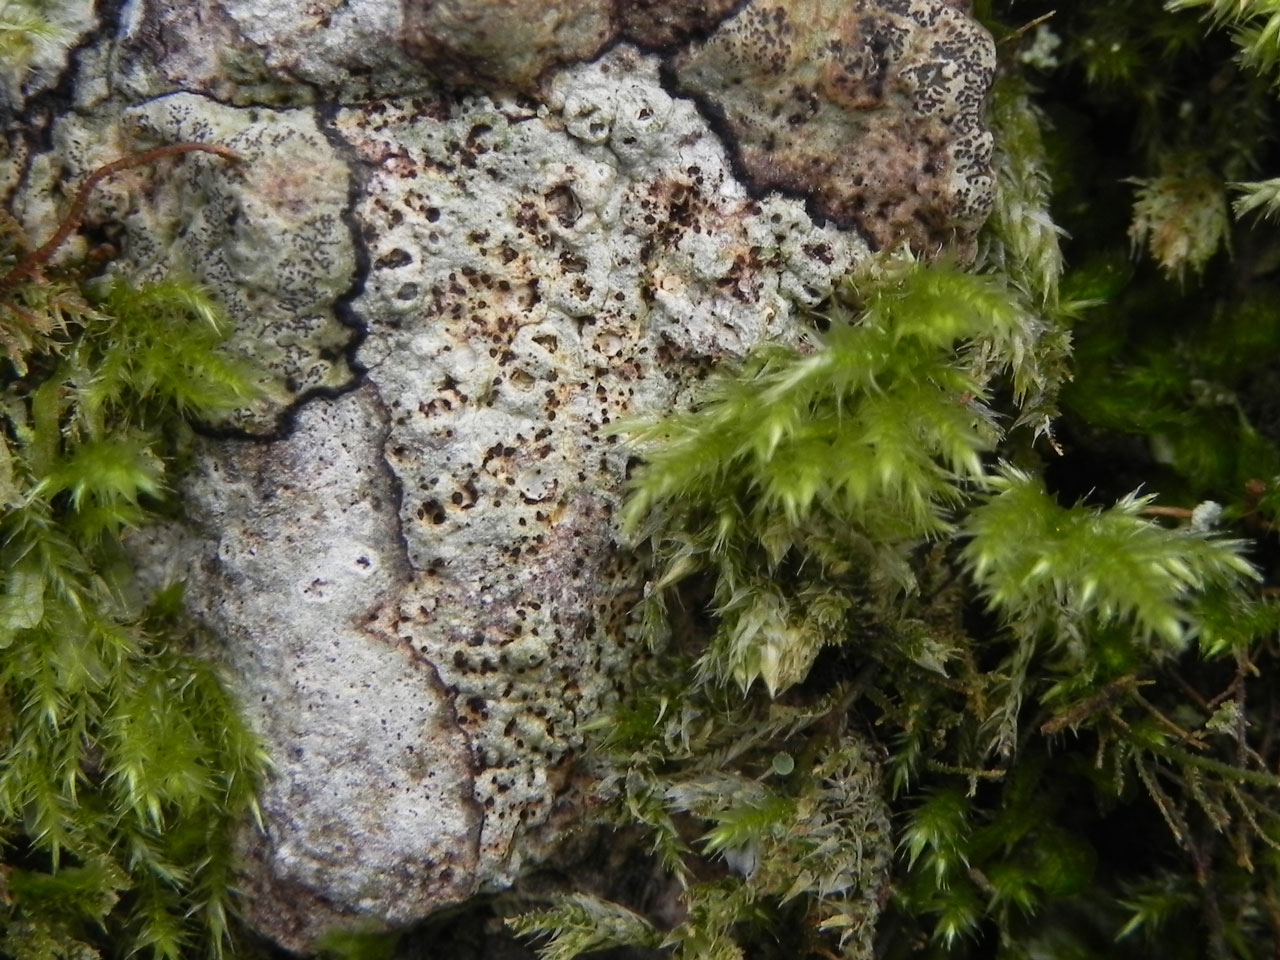 Skyttea nitschkei on Thelotrema lepadinum, Oak, Mallard Wood, New Forest